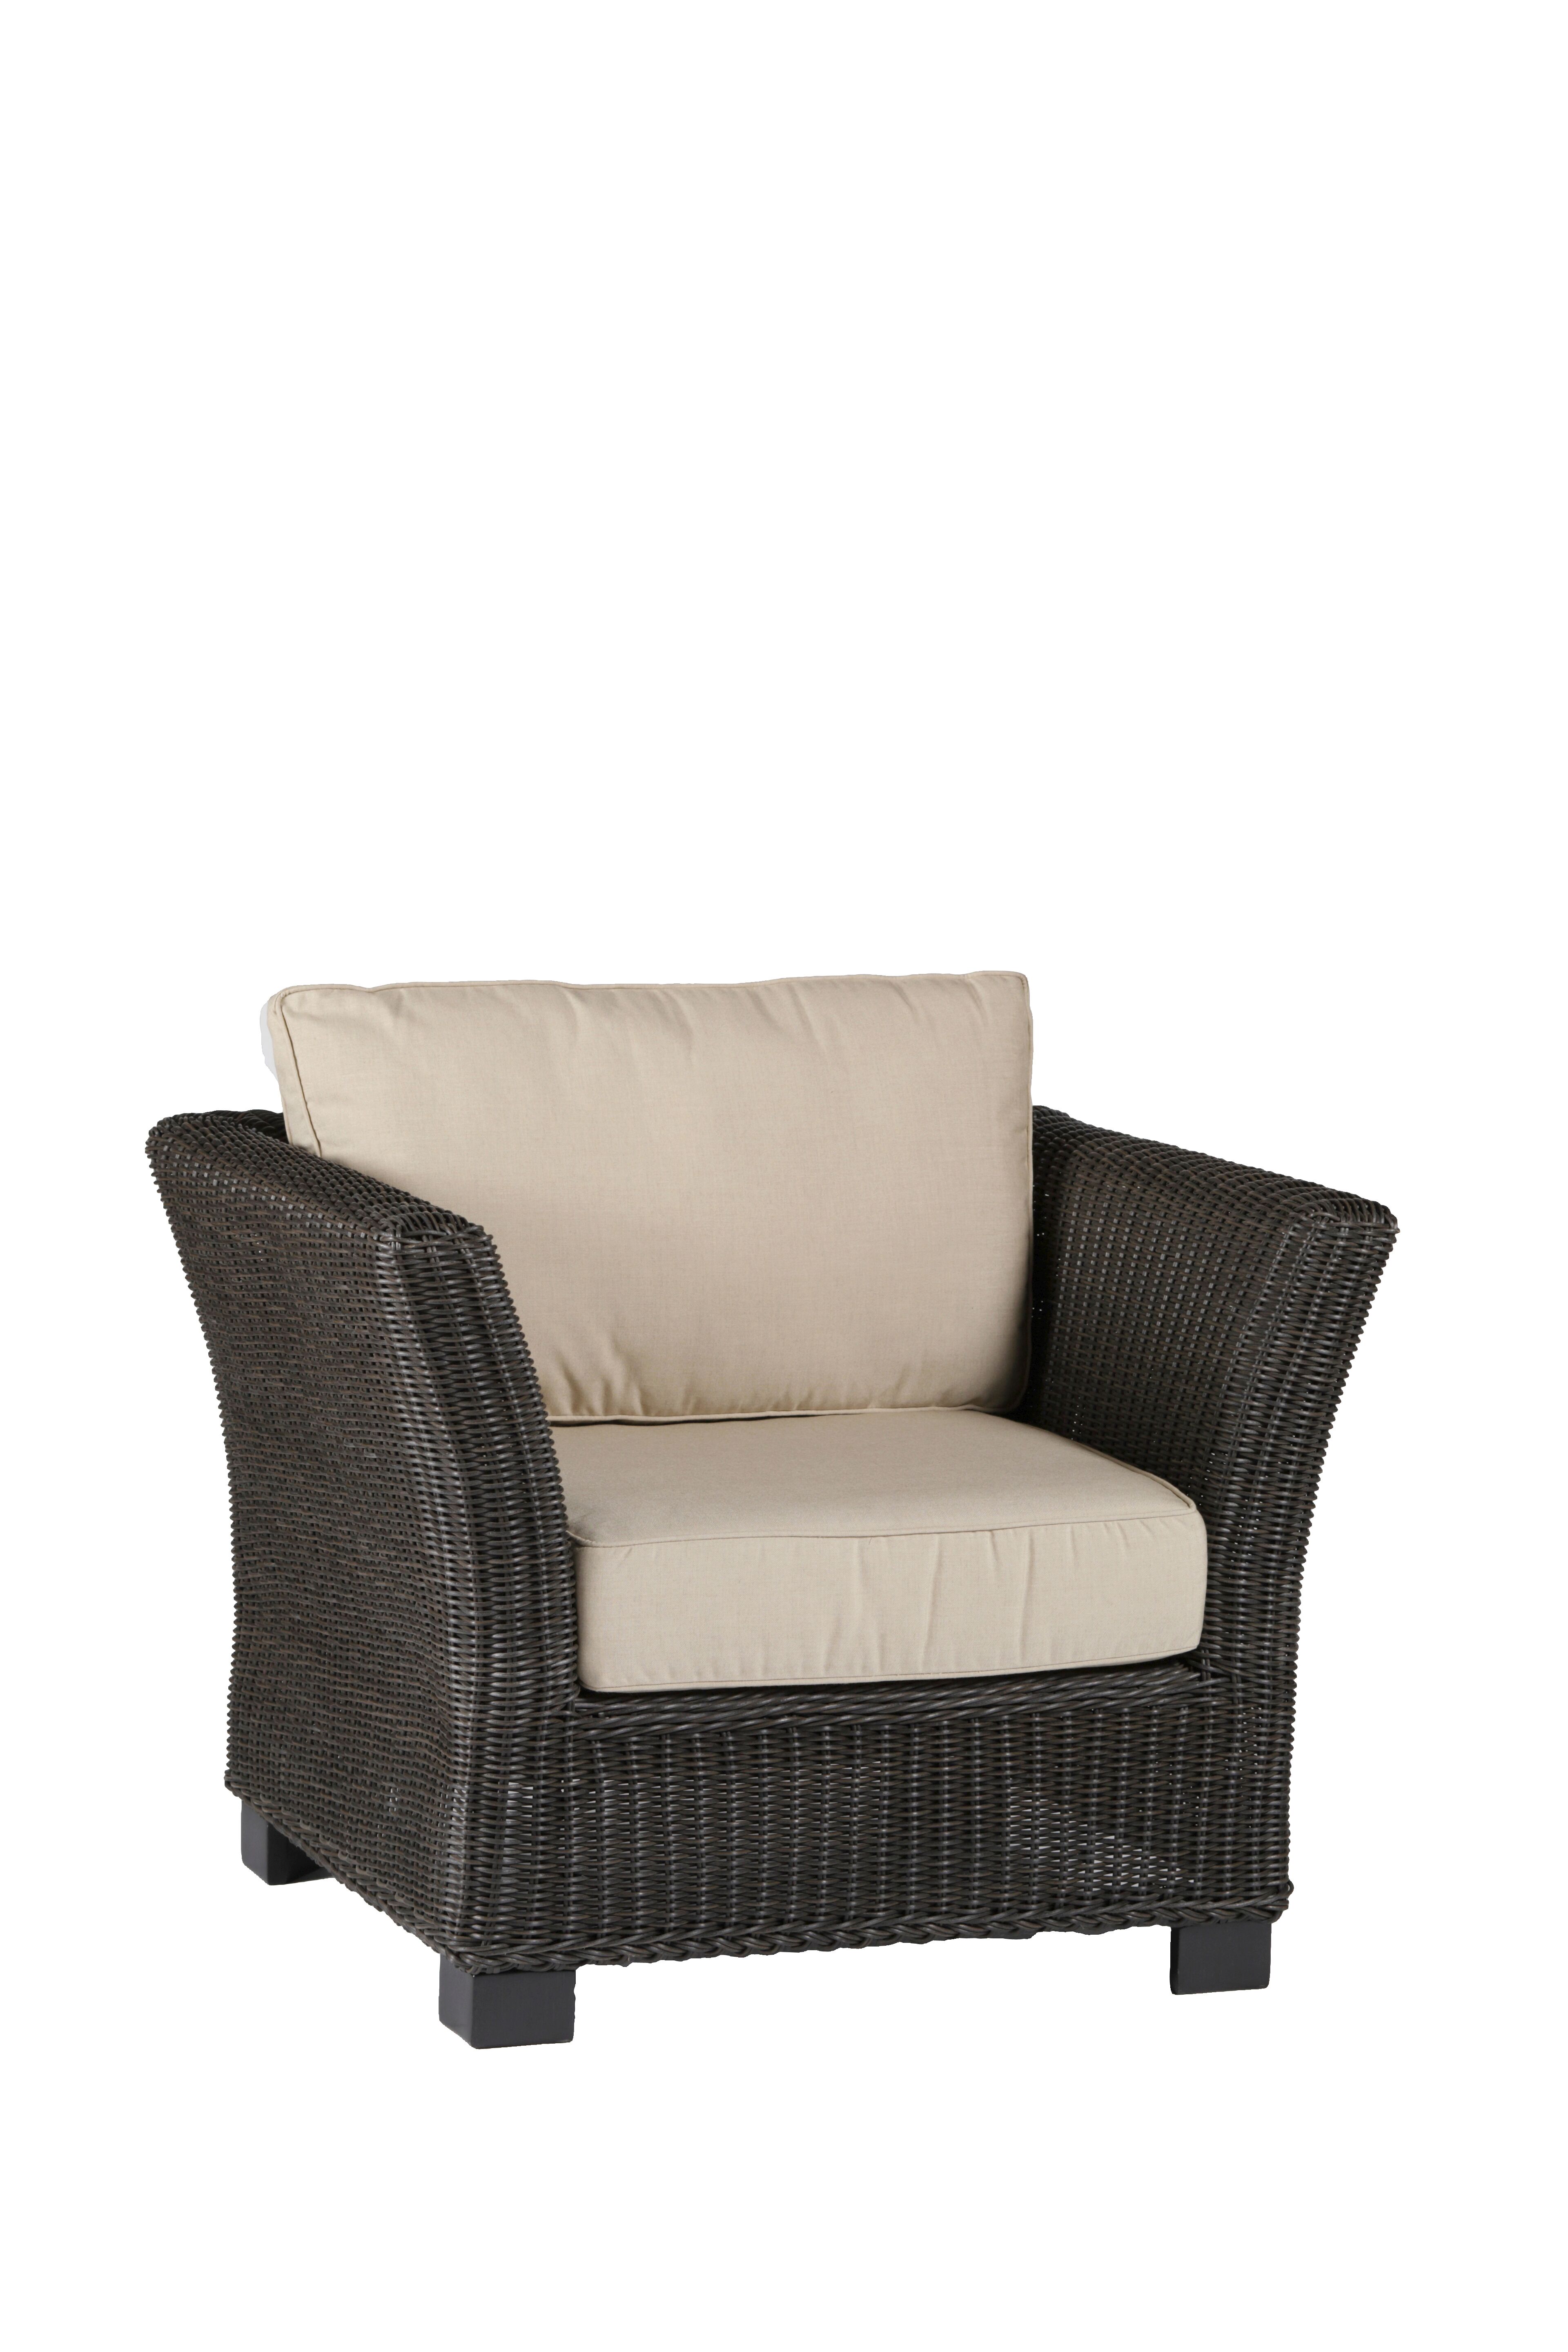 linen indigo cushion for provance ottoman product image